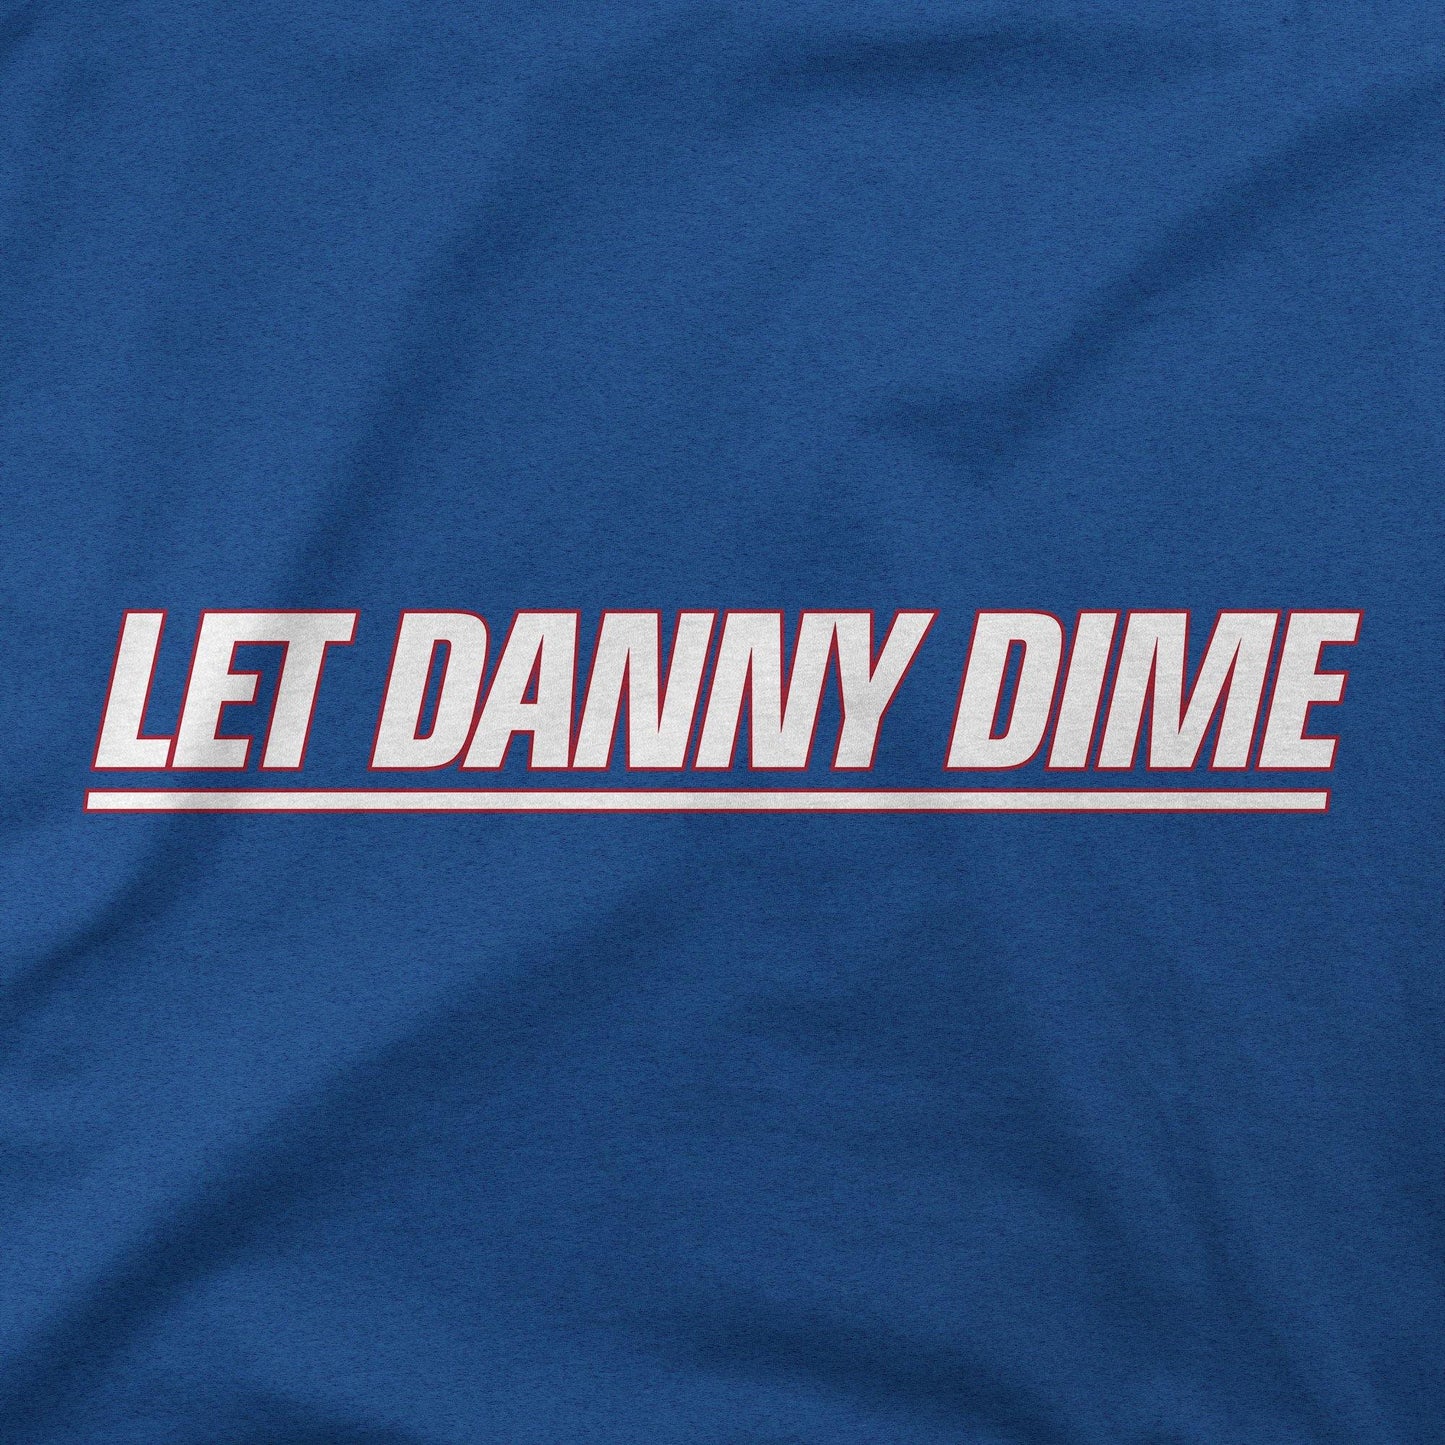 Let Danny Dime | T-Shirt - Jomboy Media